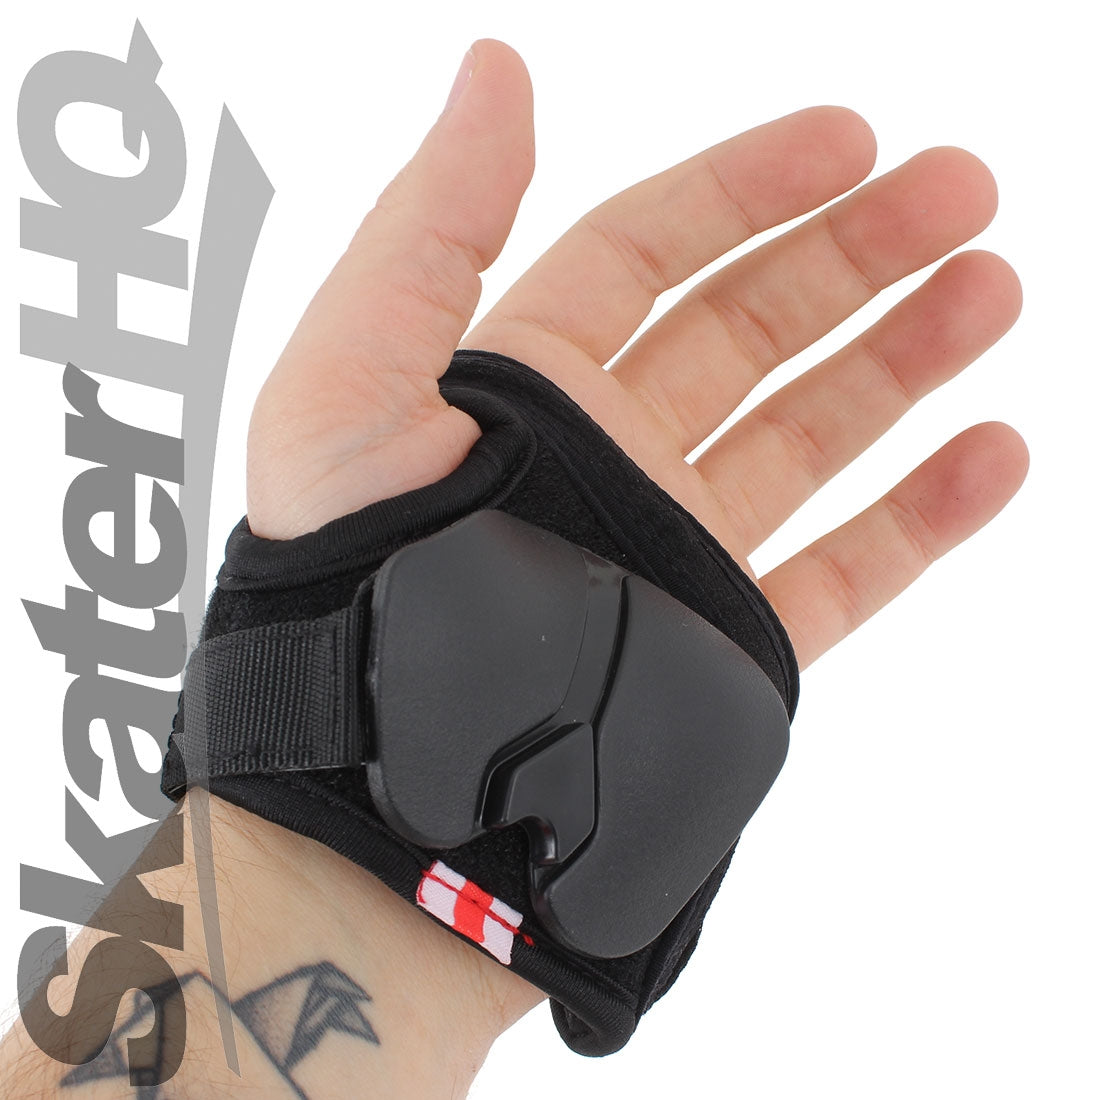 Ennui Palm Slider Gloves Protective Gear